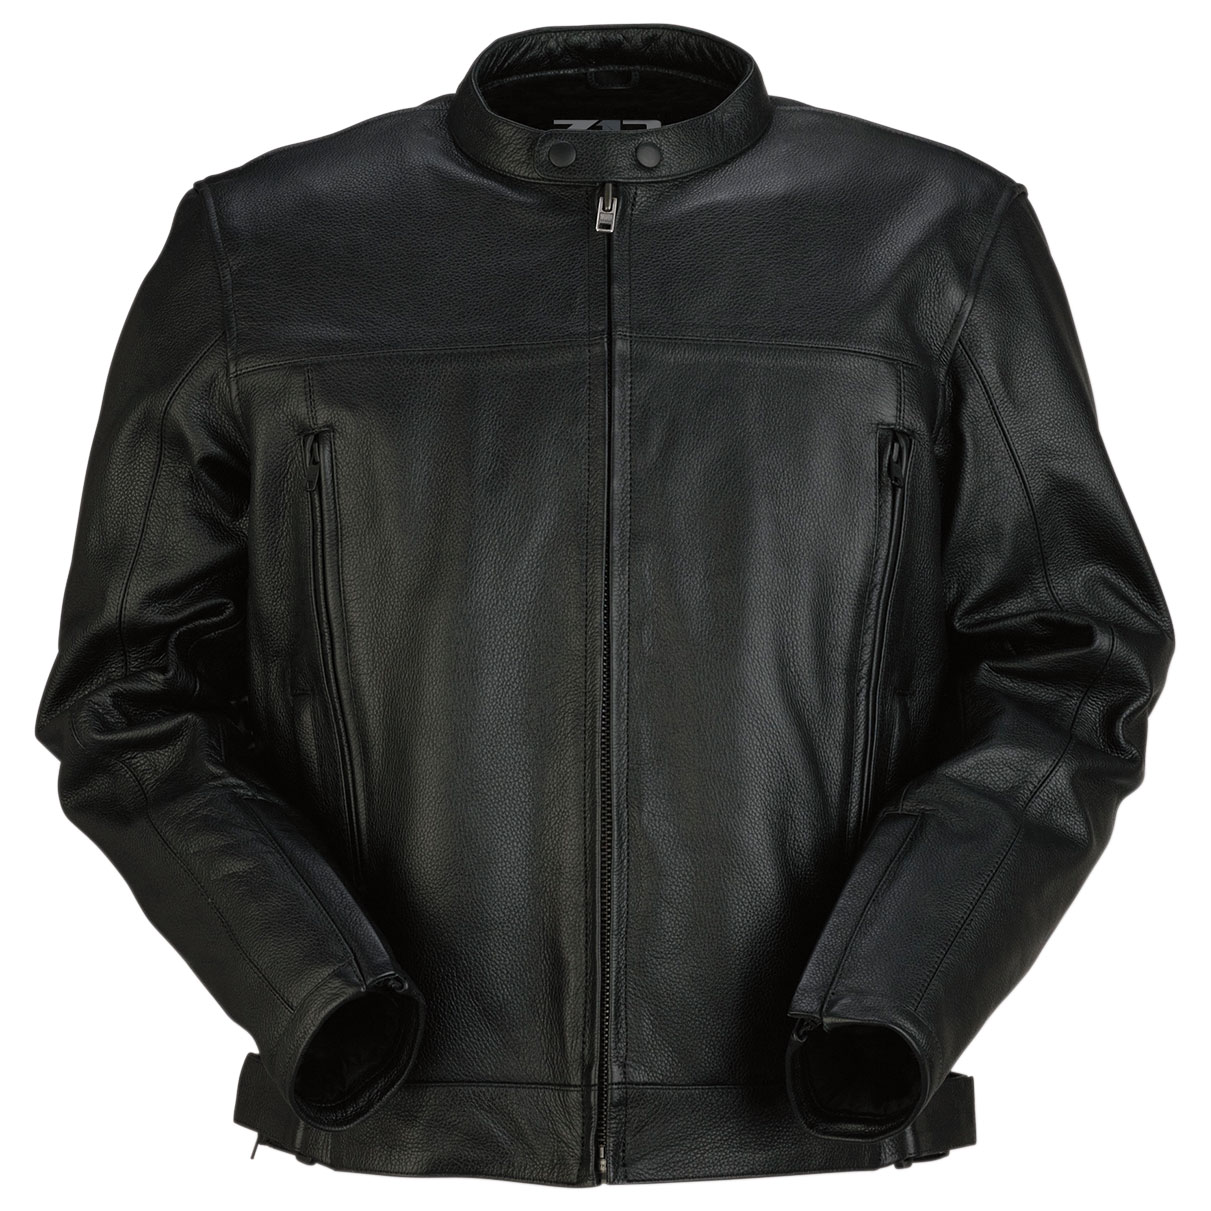 Z1R Men's Arsenal Black Leather Jacket